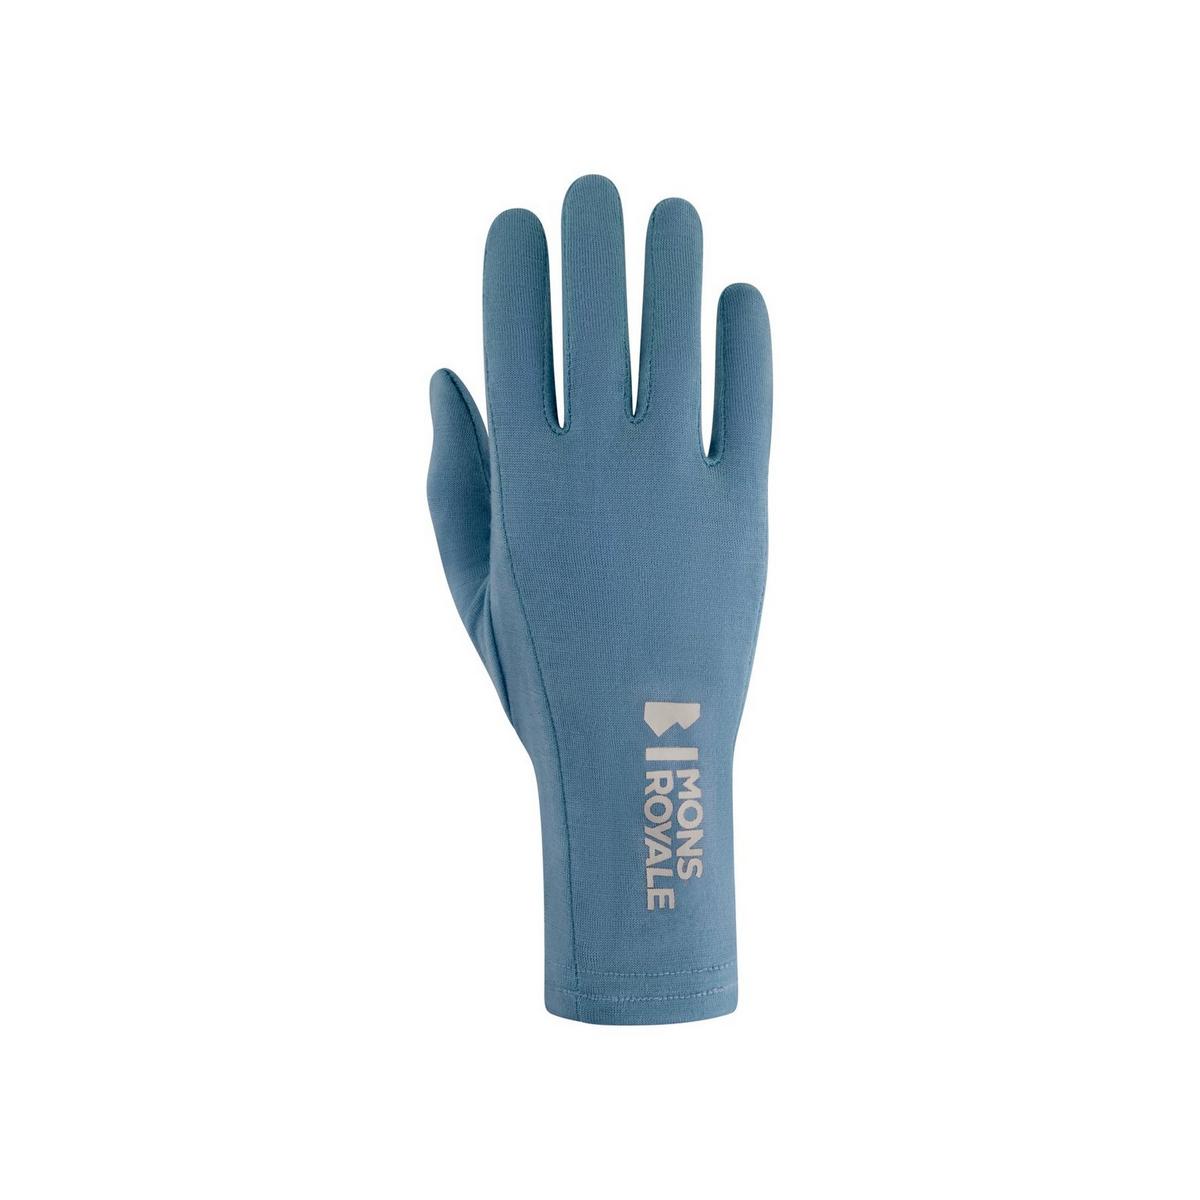 Mons Royale Olympus Glove Liner - Blue